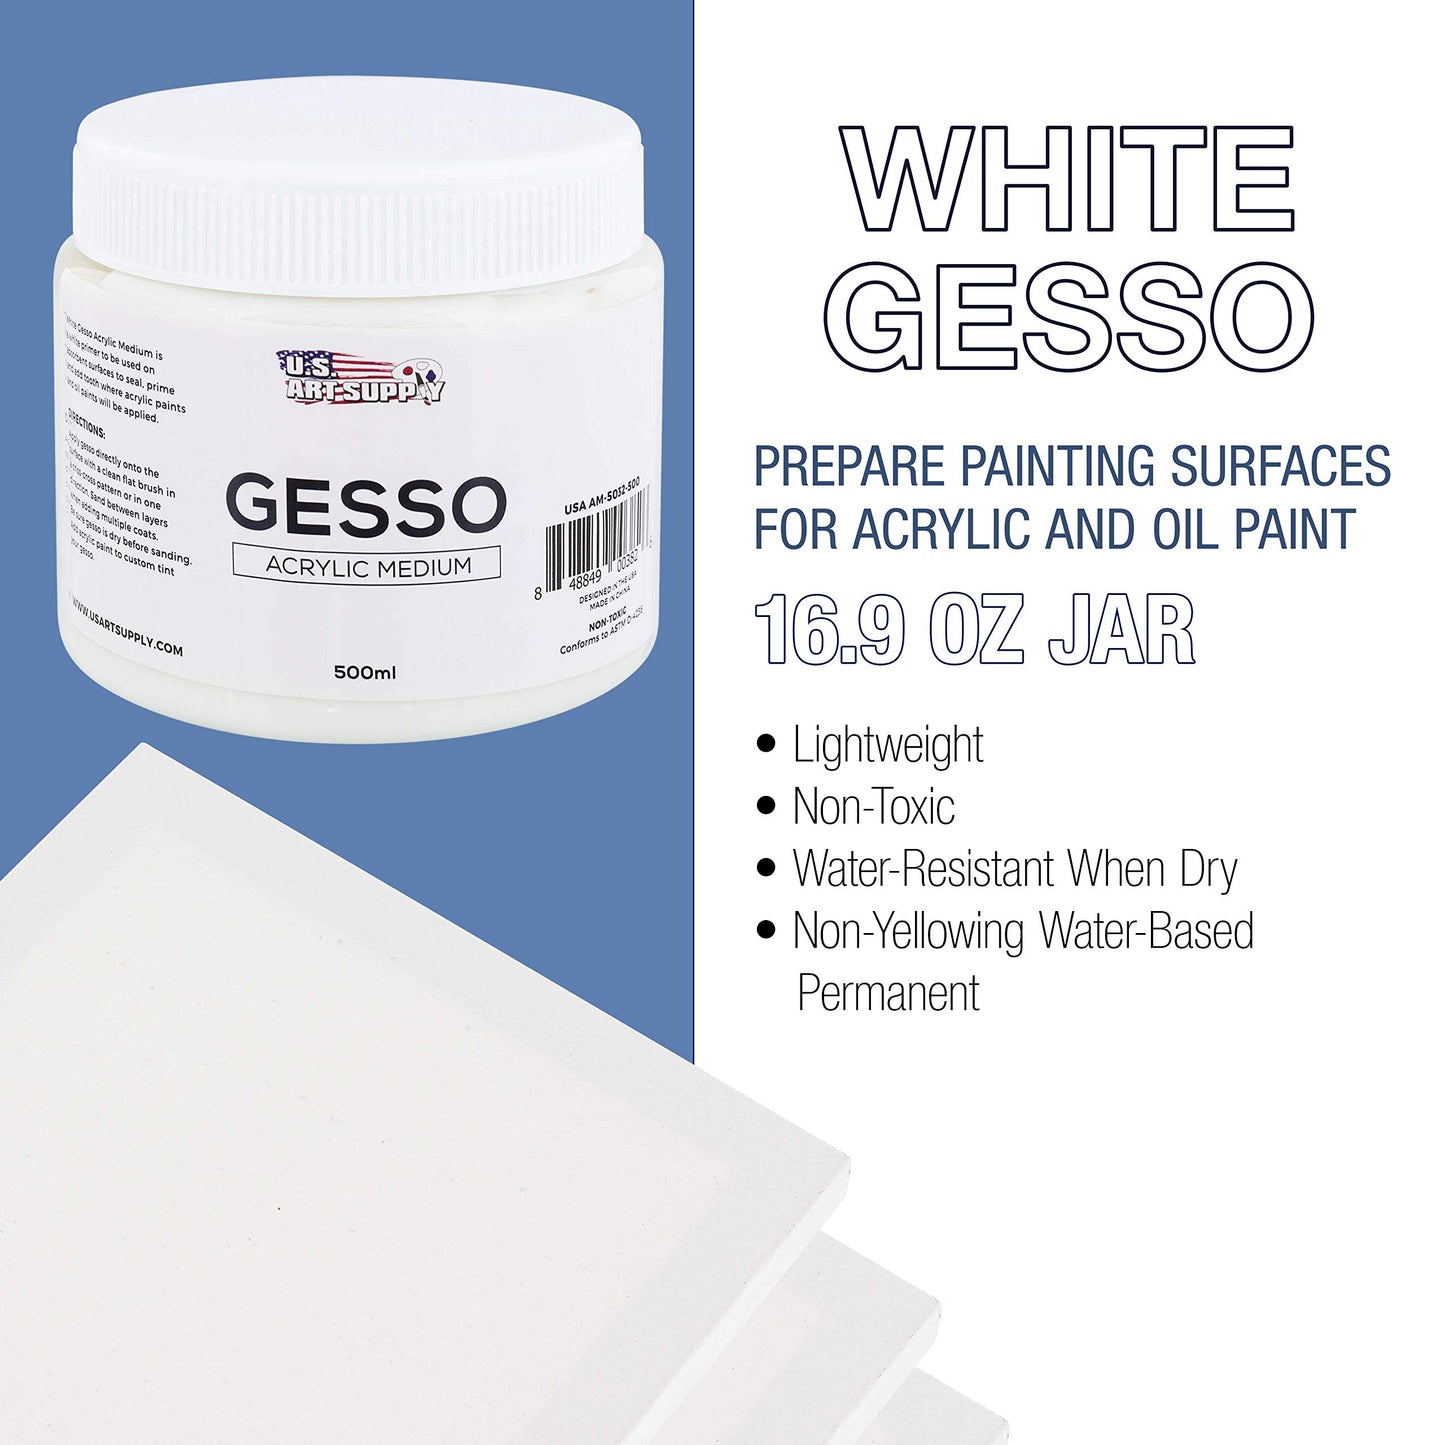 U.S. Art Supply White Gesso Acrylic Medium, 500ml Tub - 16.9 Ounces over a Pint